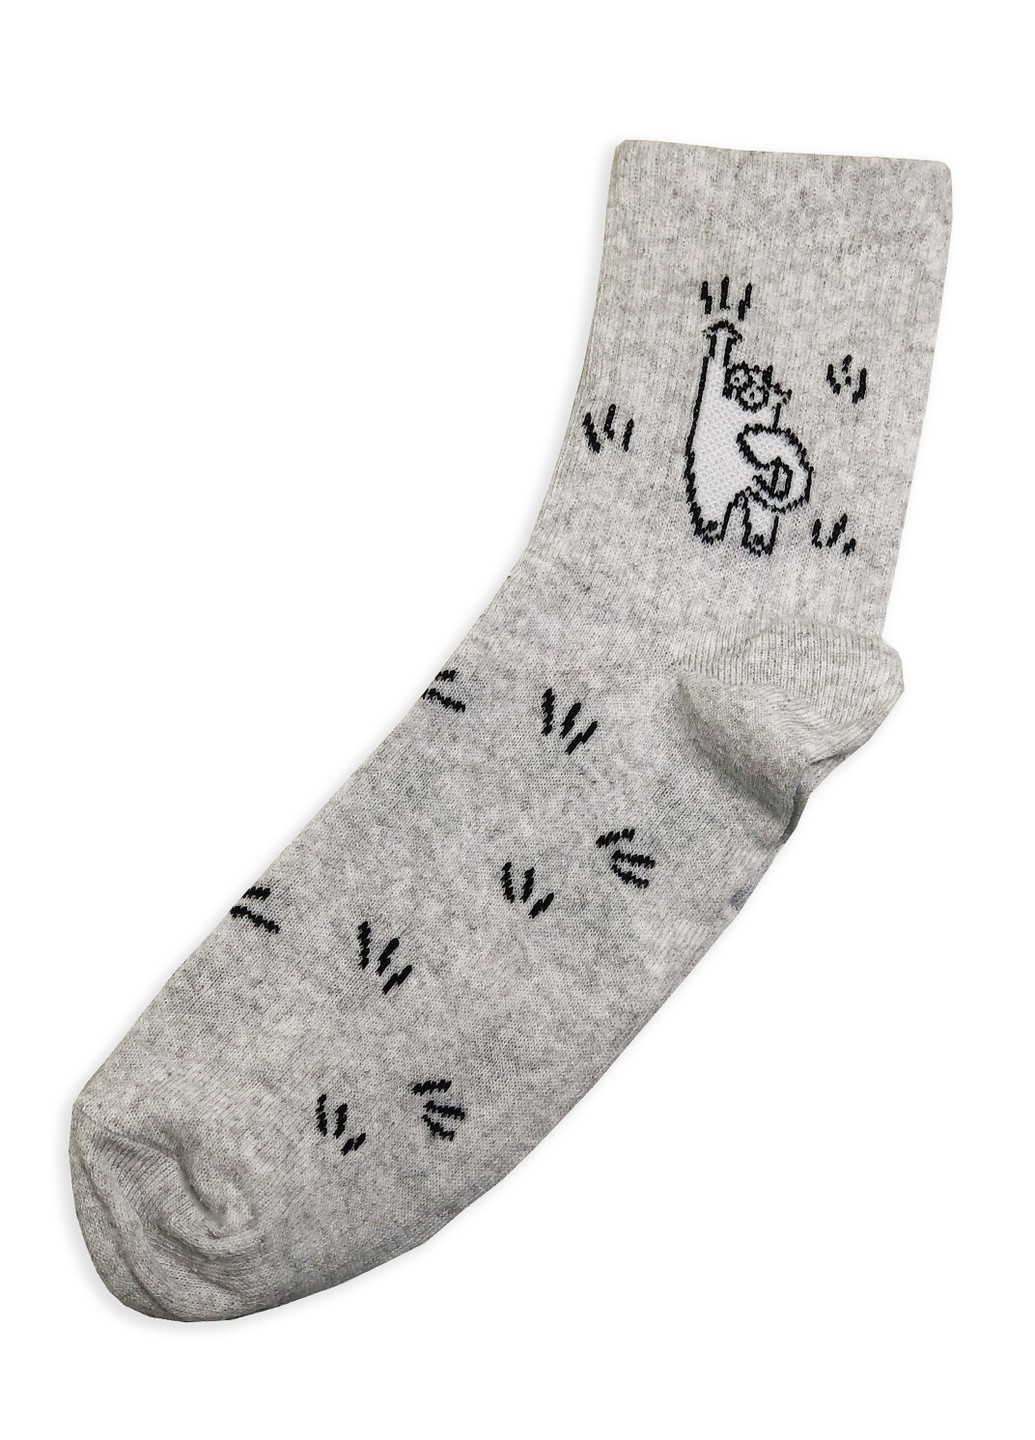 Носки Кот царапка Rock'n'socks высокие (211258854)